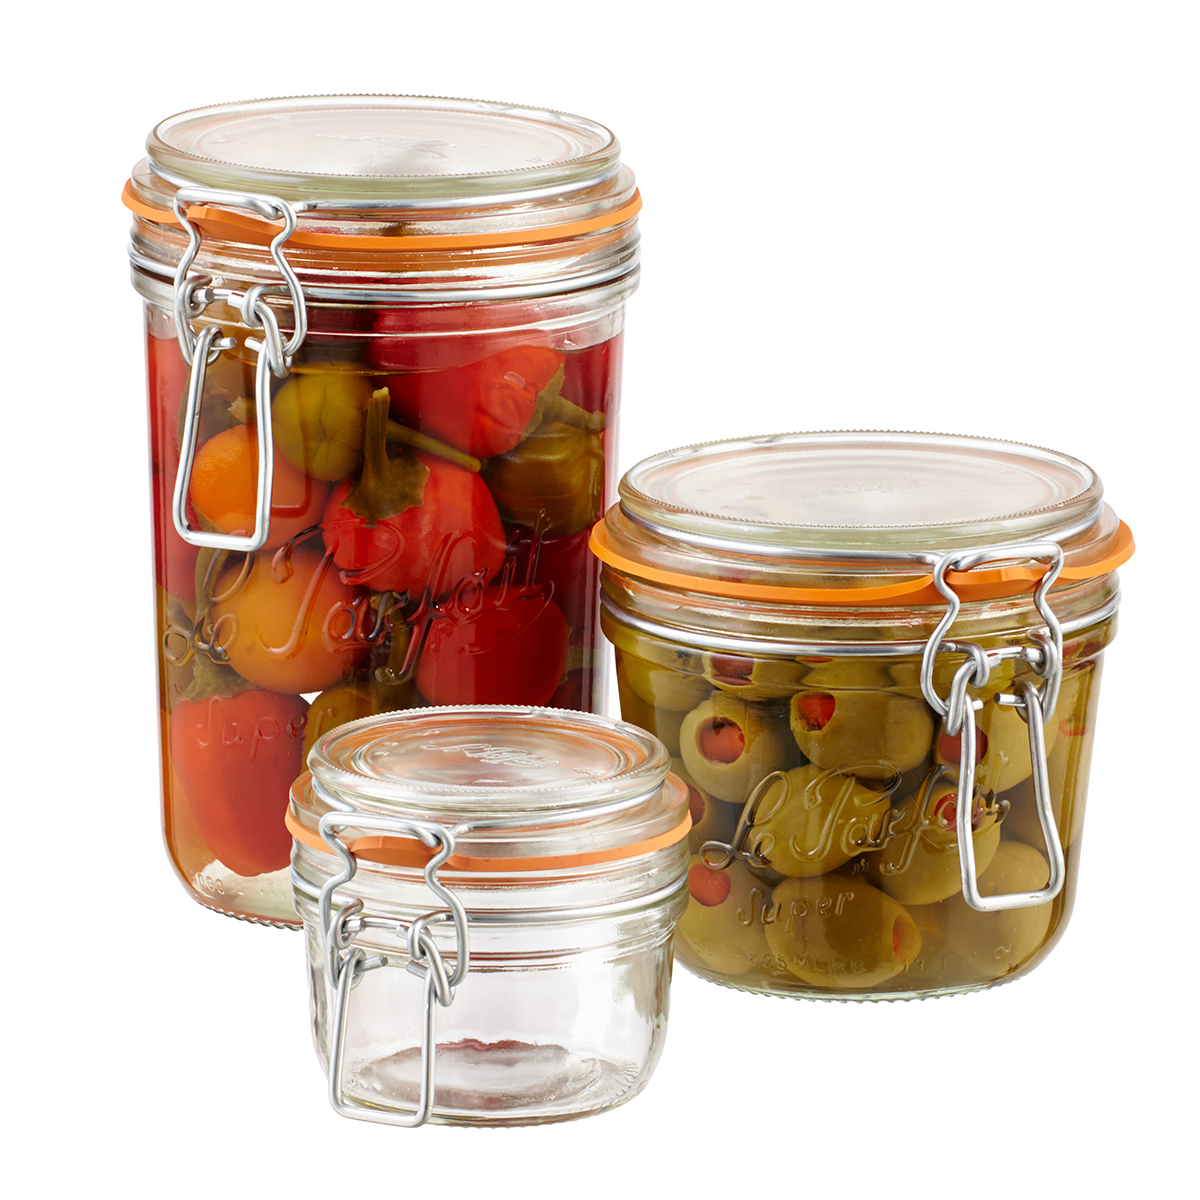 Le Parfait's Storage Jars Are the Secret to My Organized Pantry